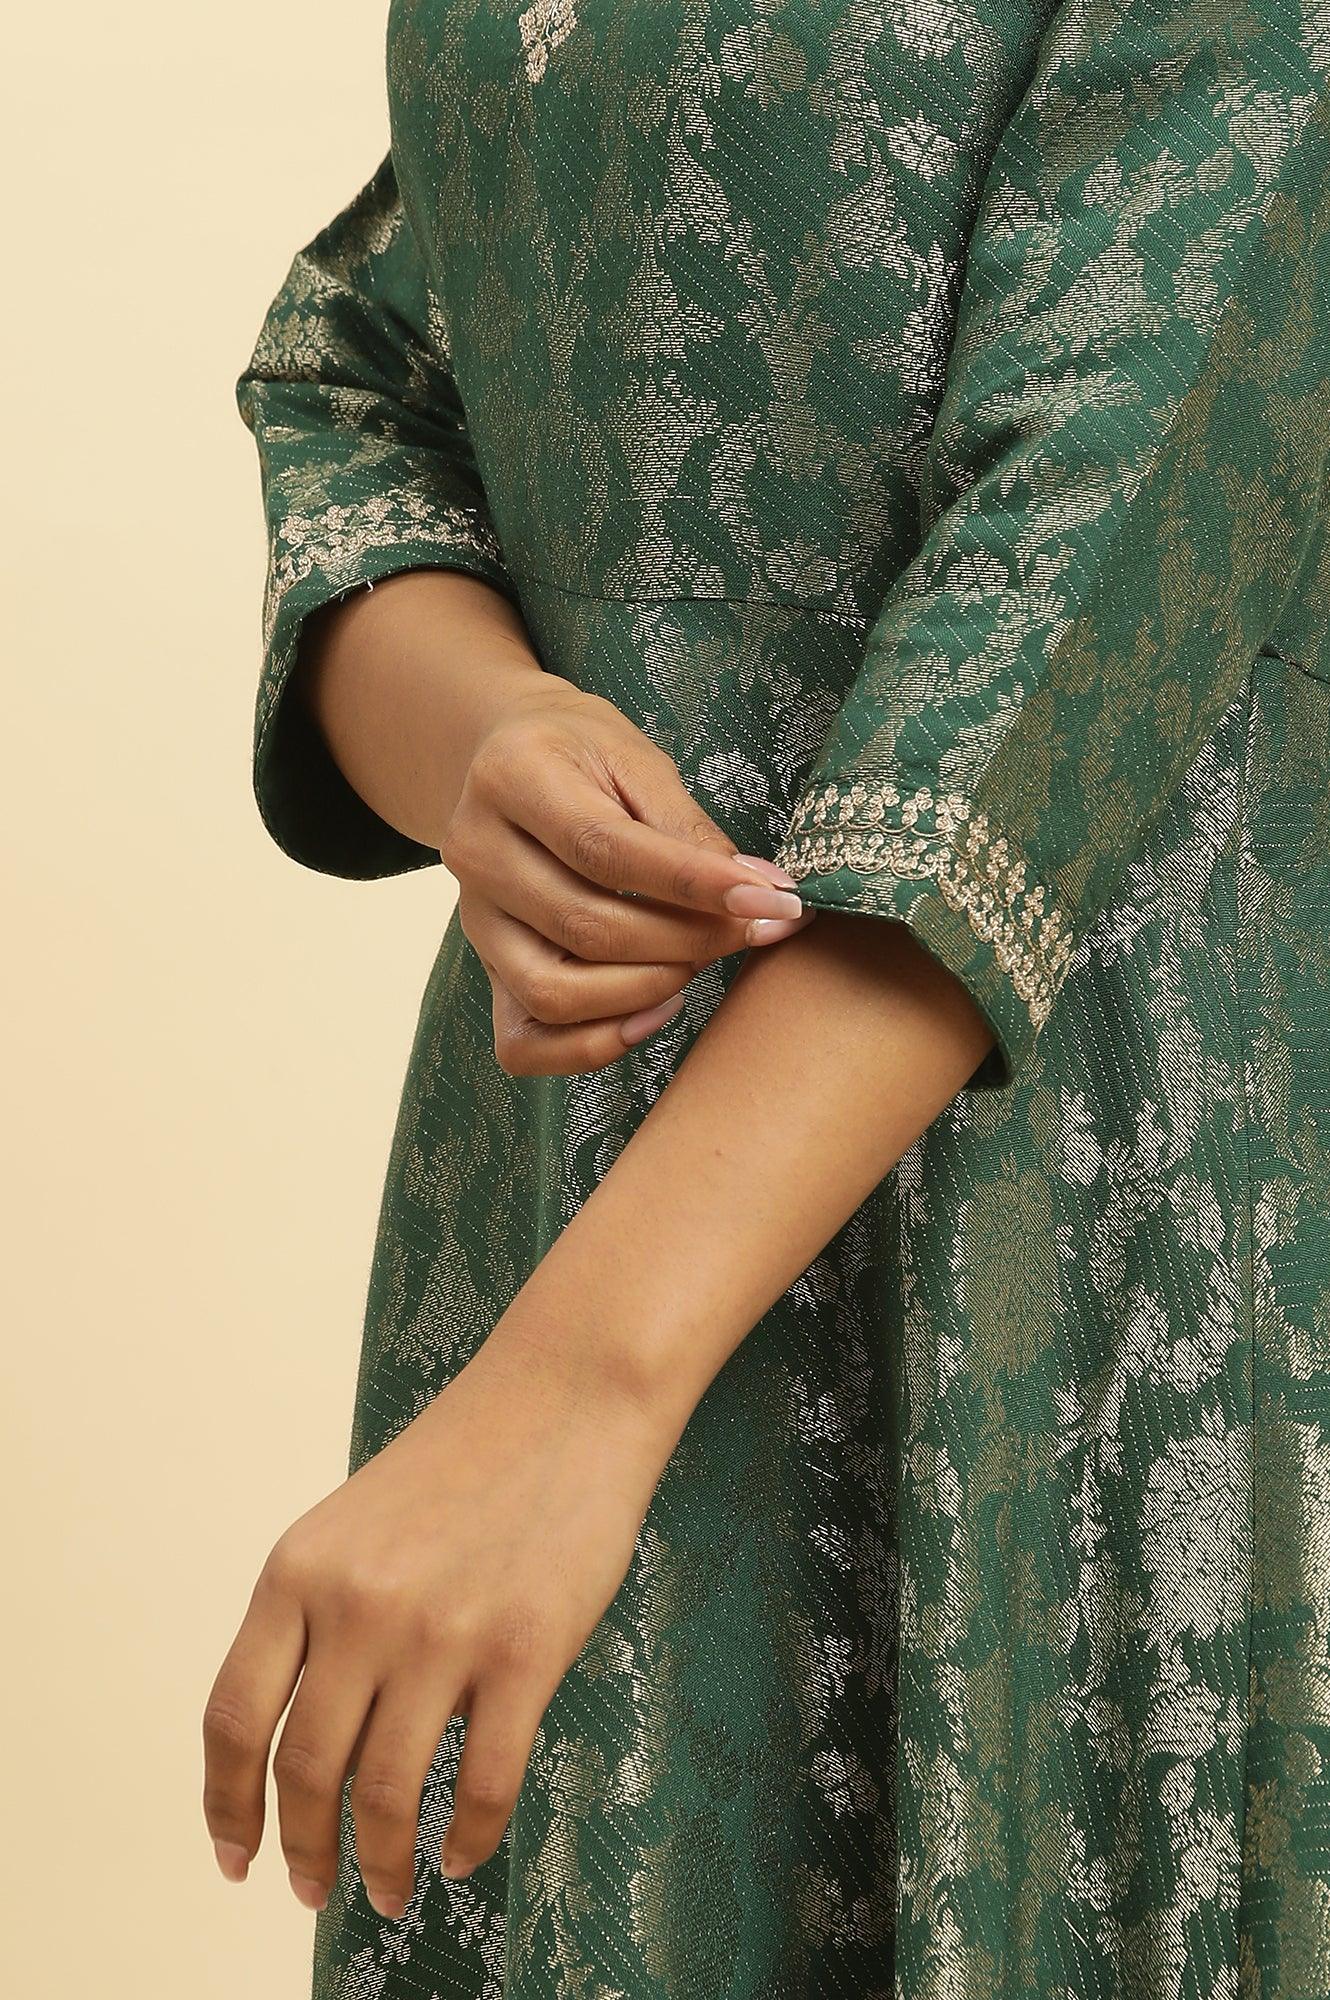 Green Jacquard Embroidered Ethnic Dress - wforwoman